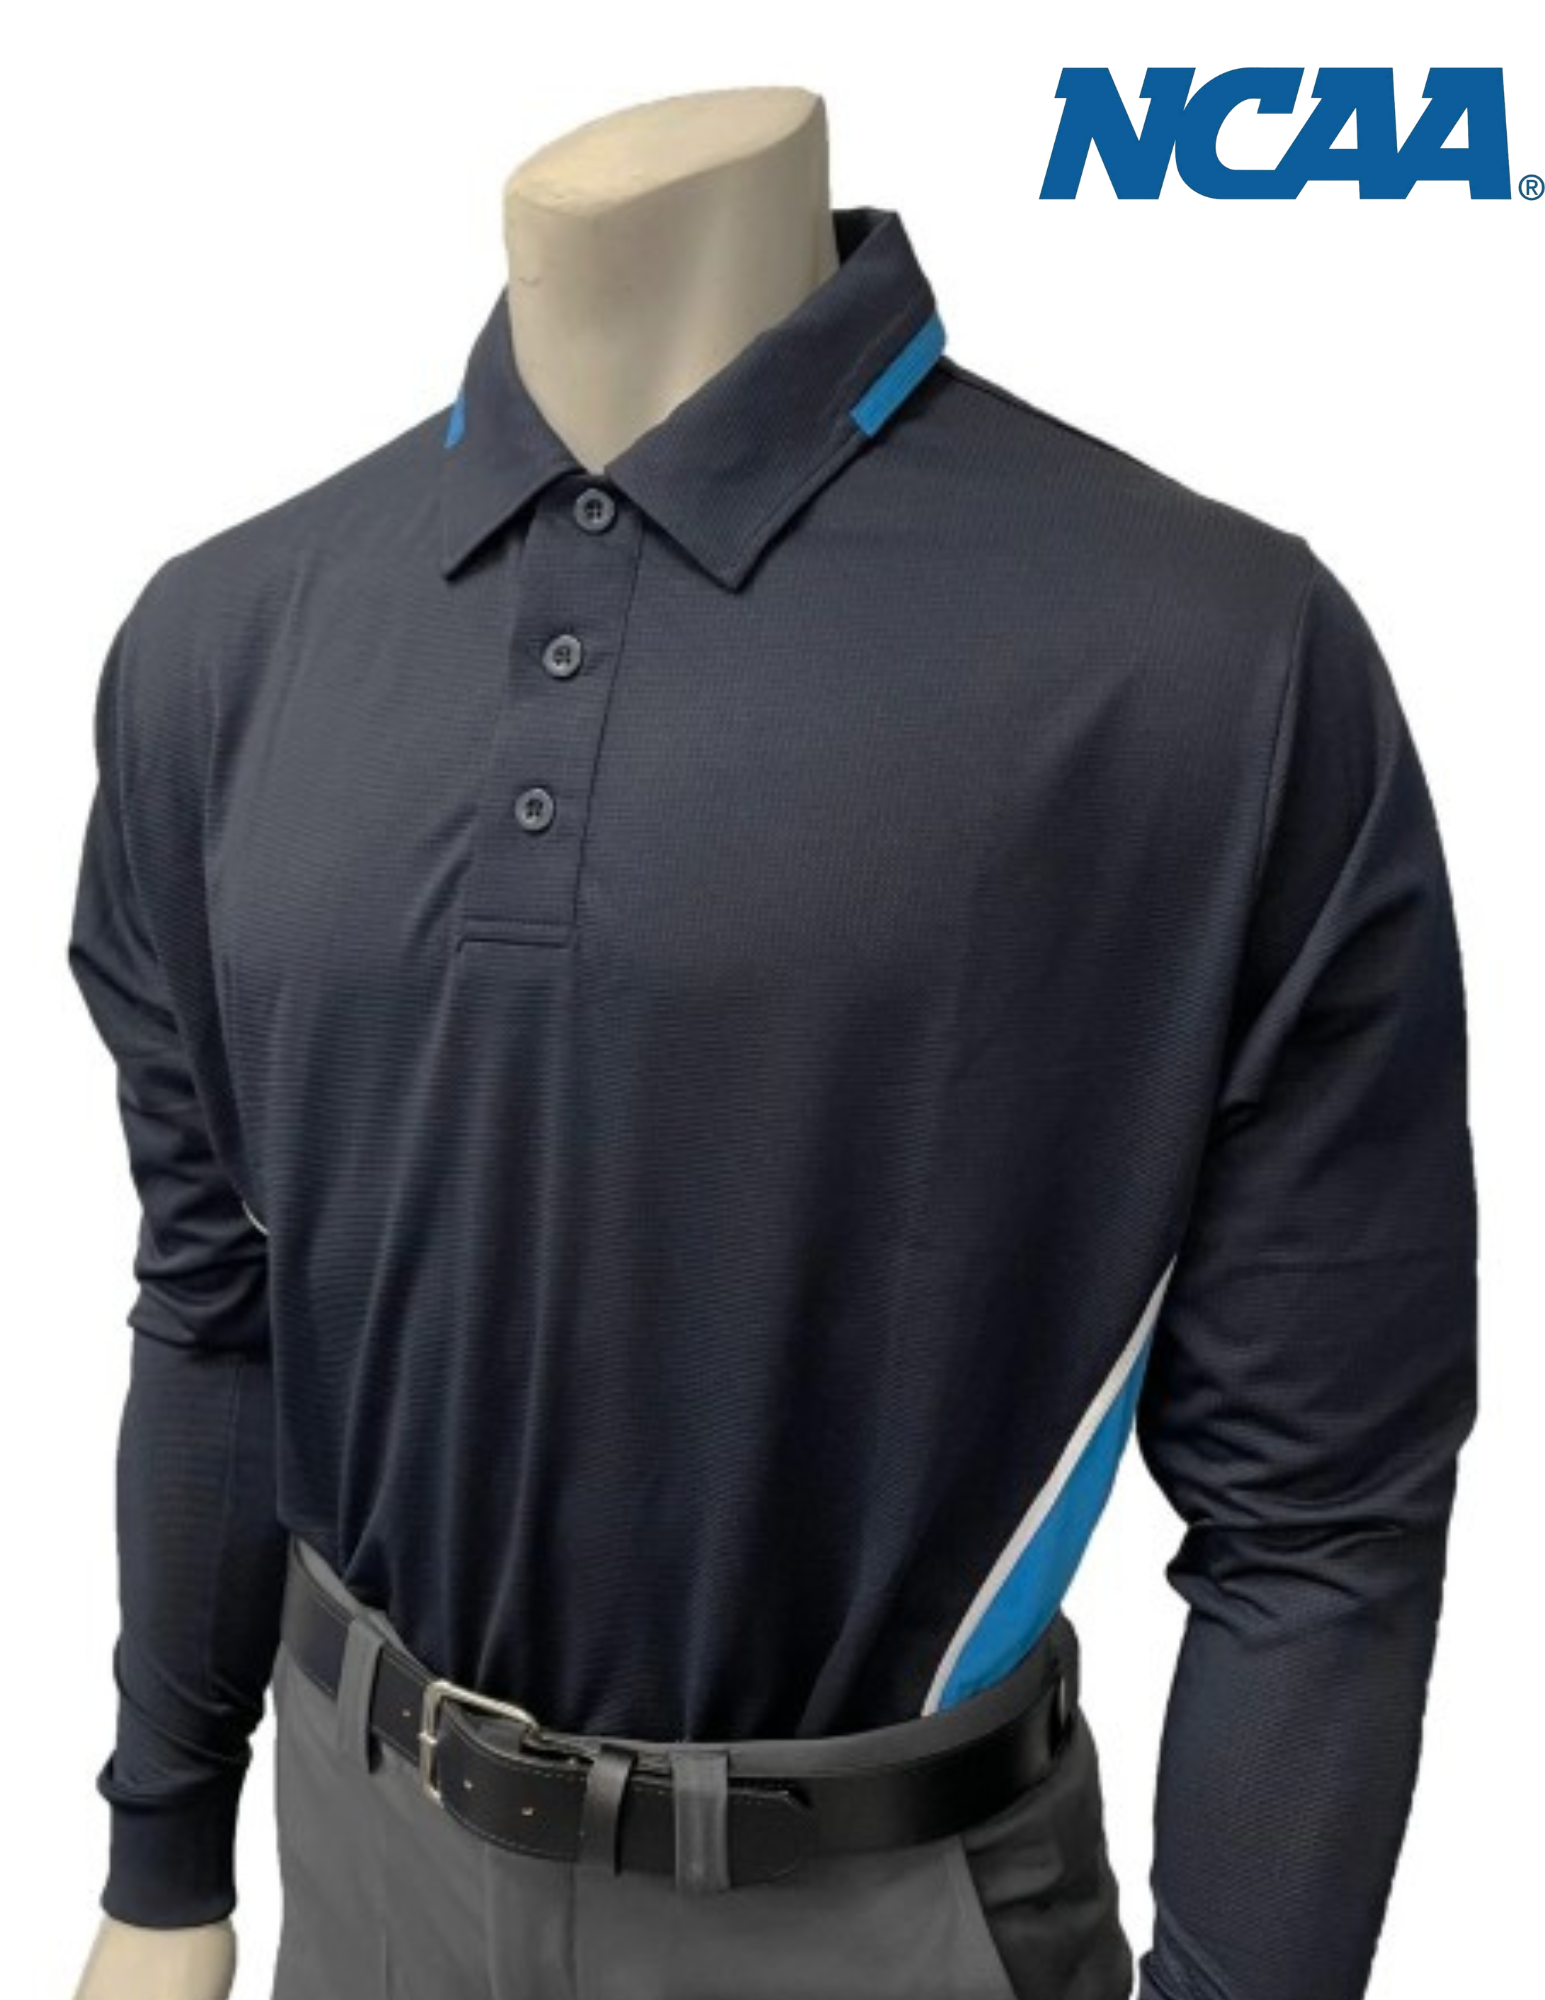 Men's BODY FLEX NCAA SOFTBALL Style Long Sleeve Umpire Shirts - Midnight Navy